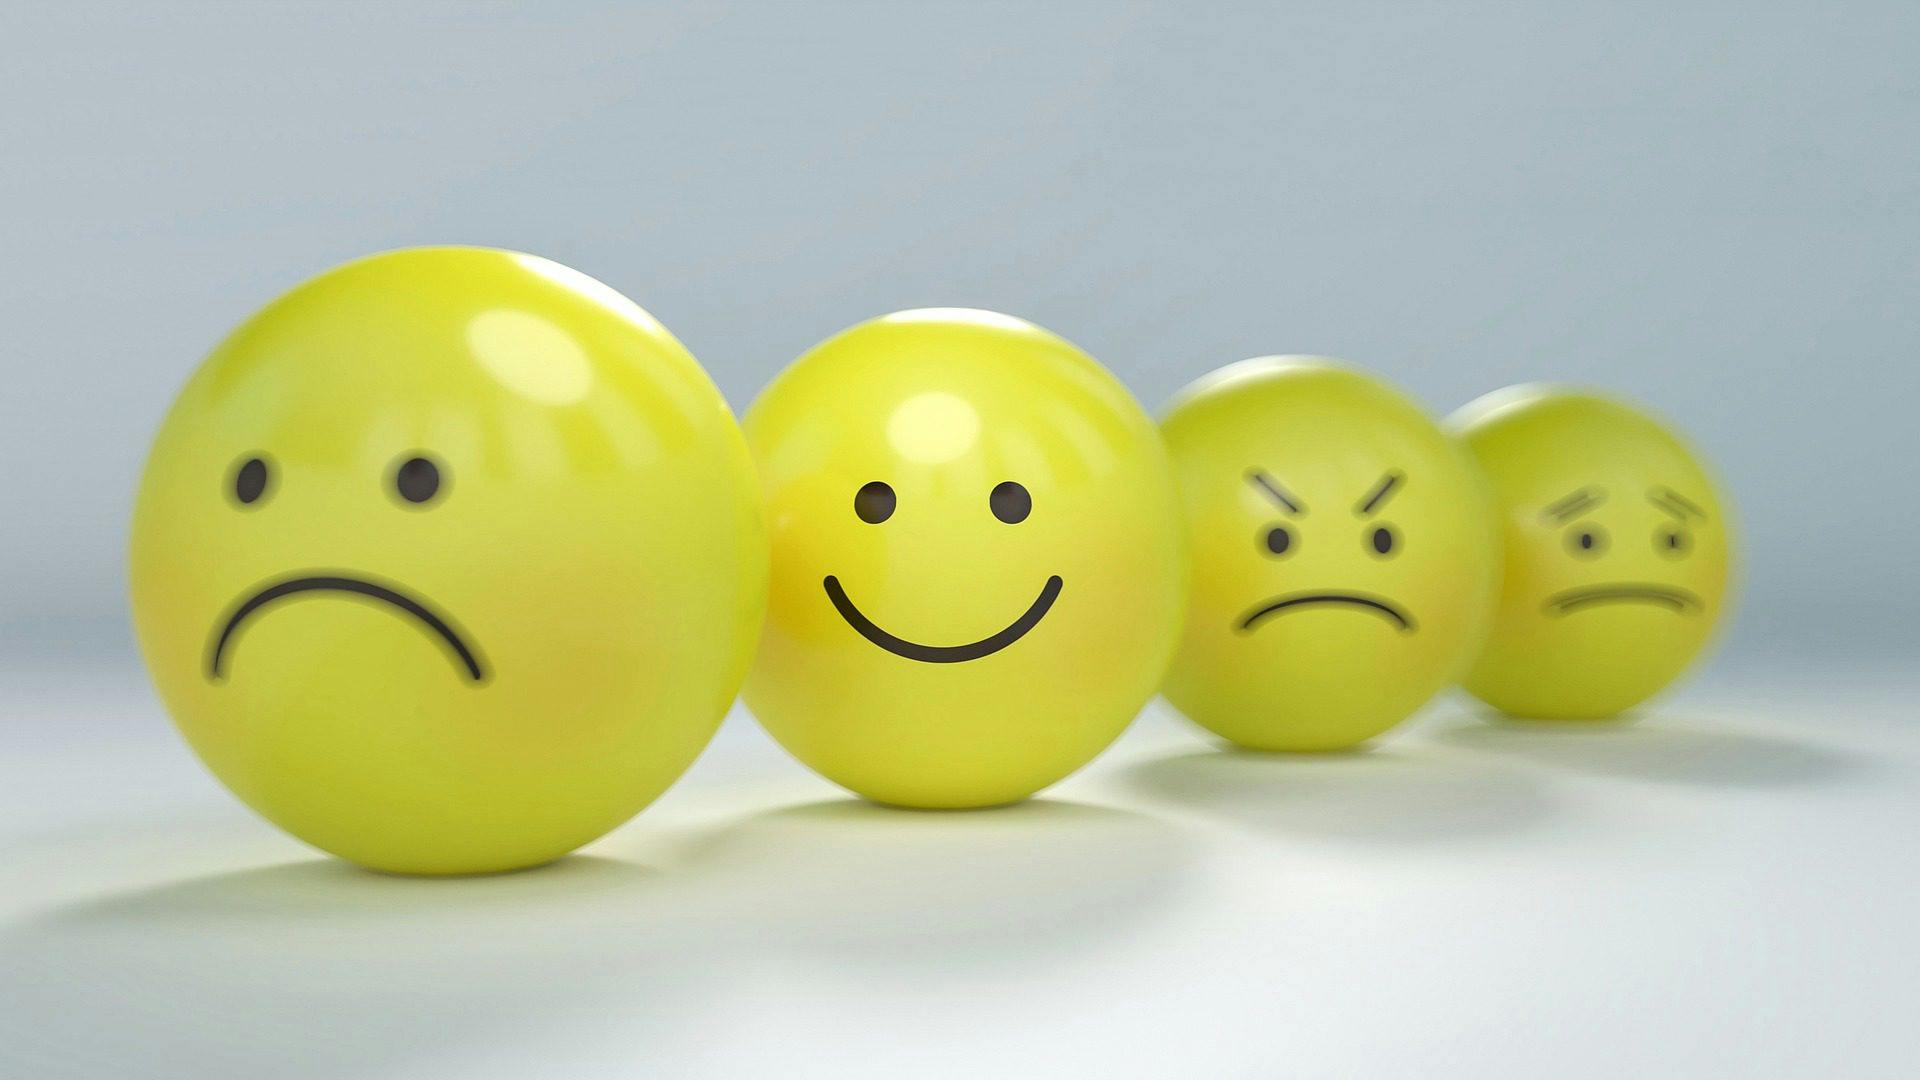 4 yellow balls displaying different emotions